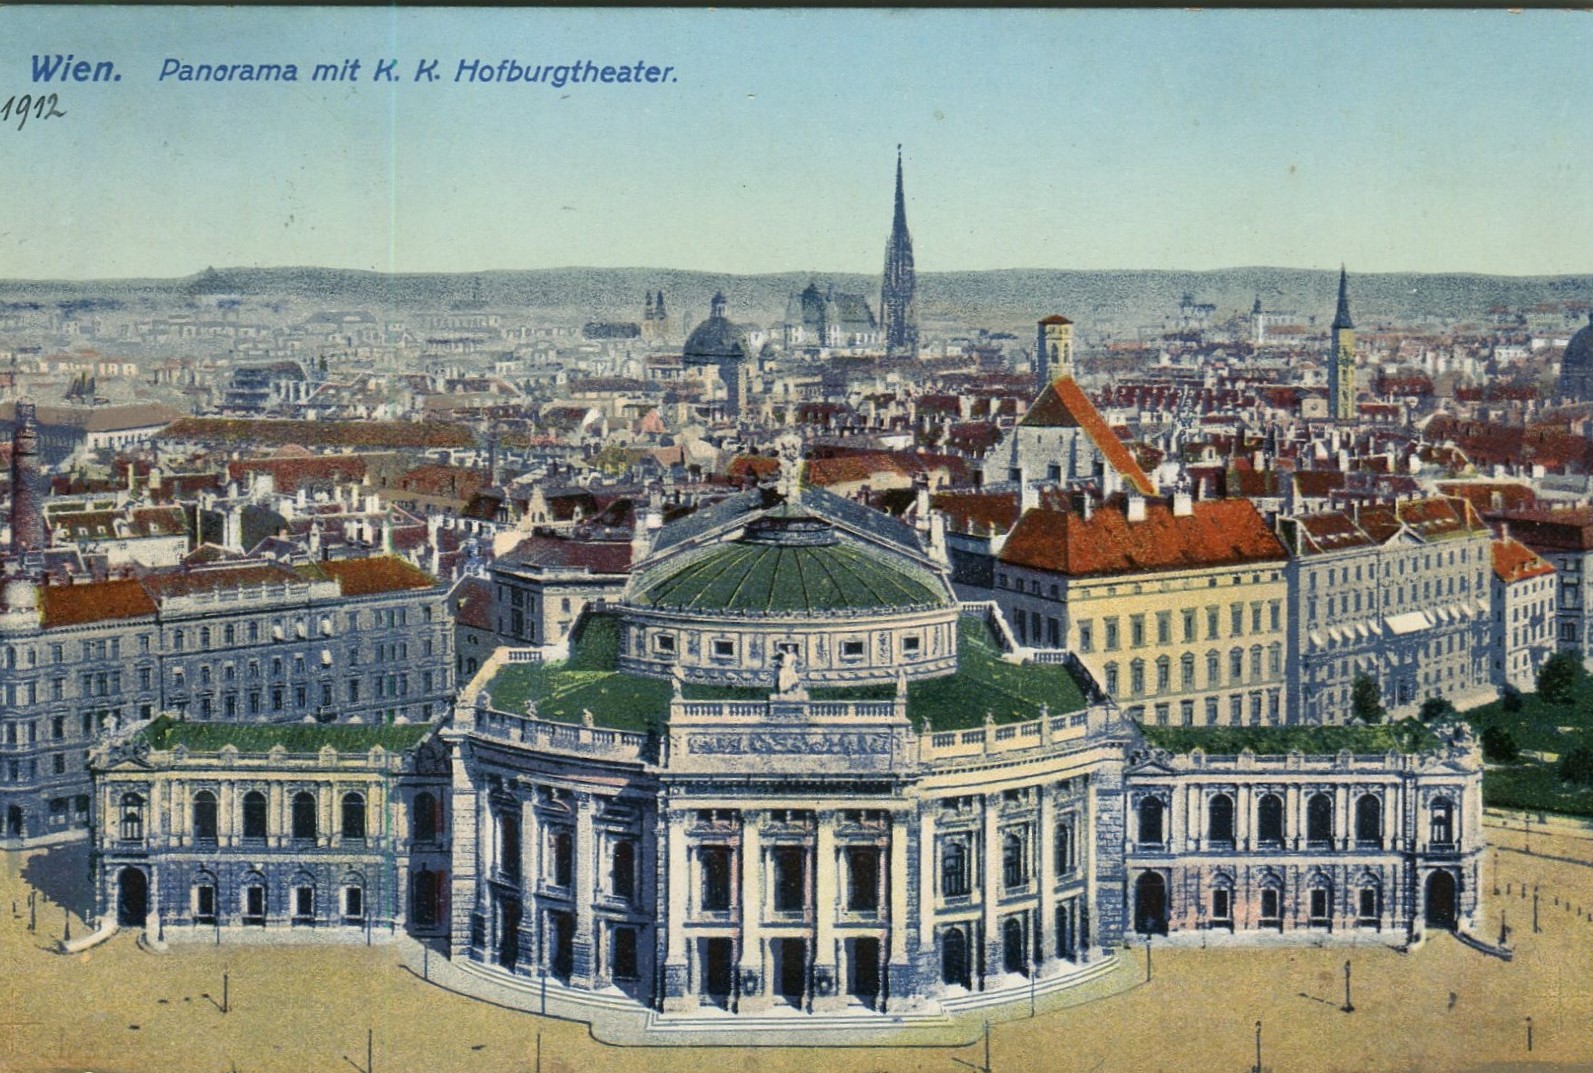 Datei:K.k. Hofburgtheater 1912.jpg